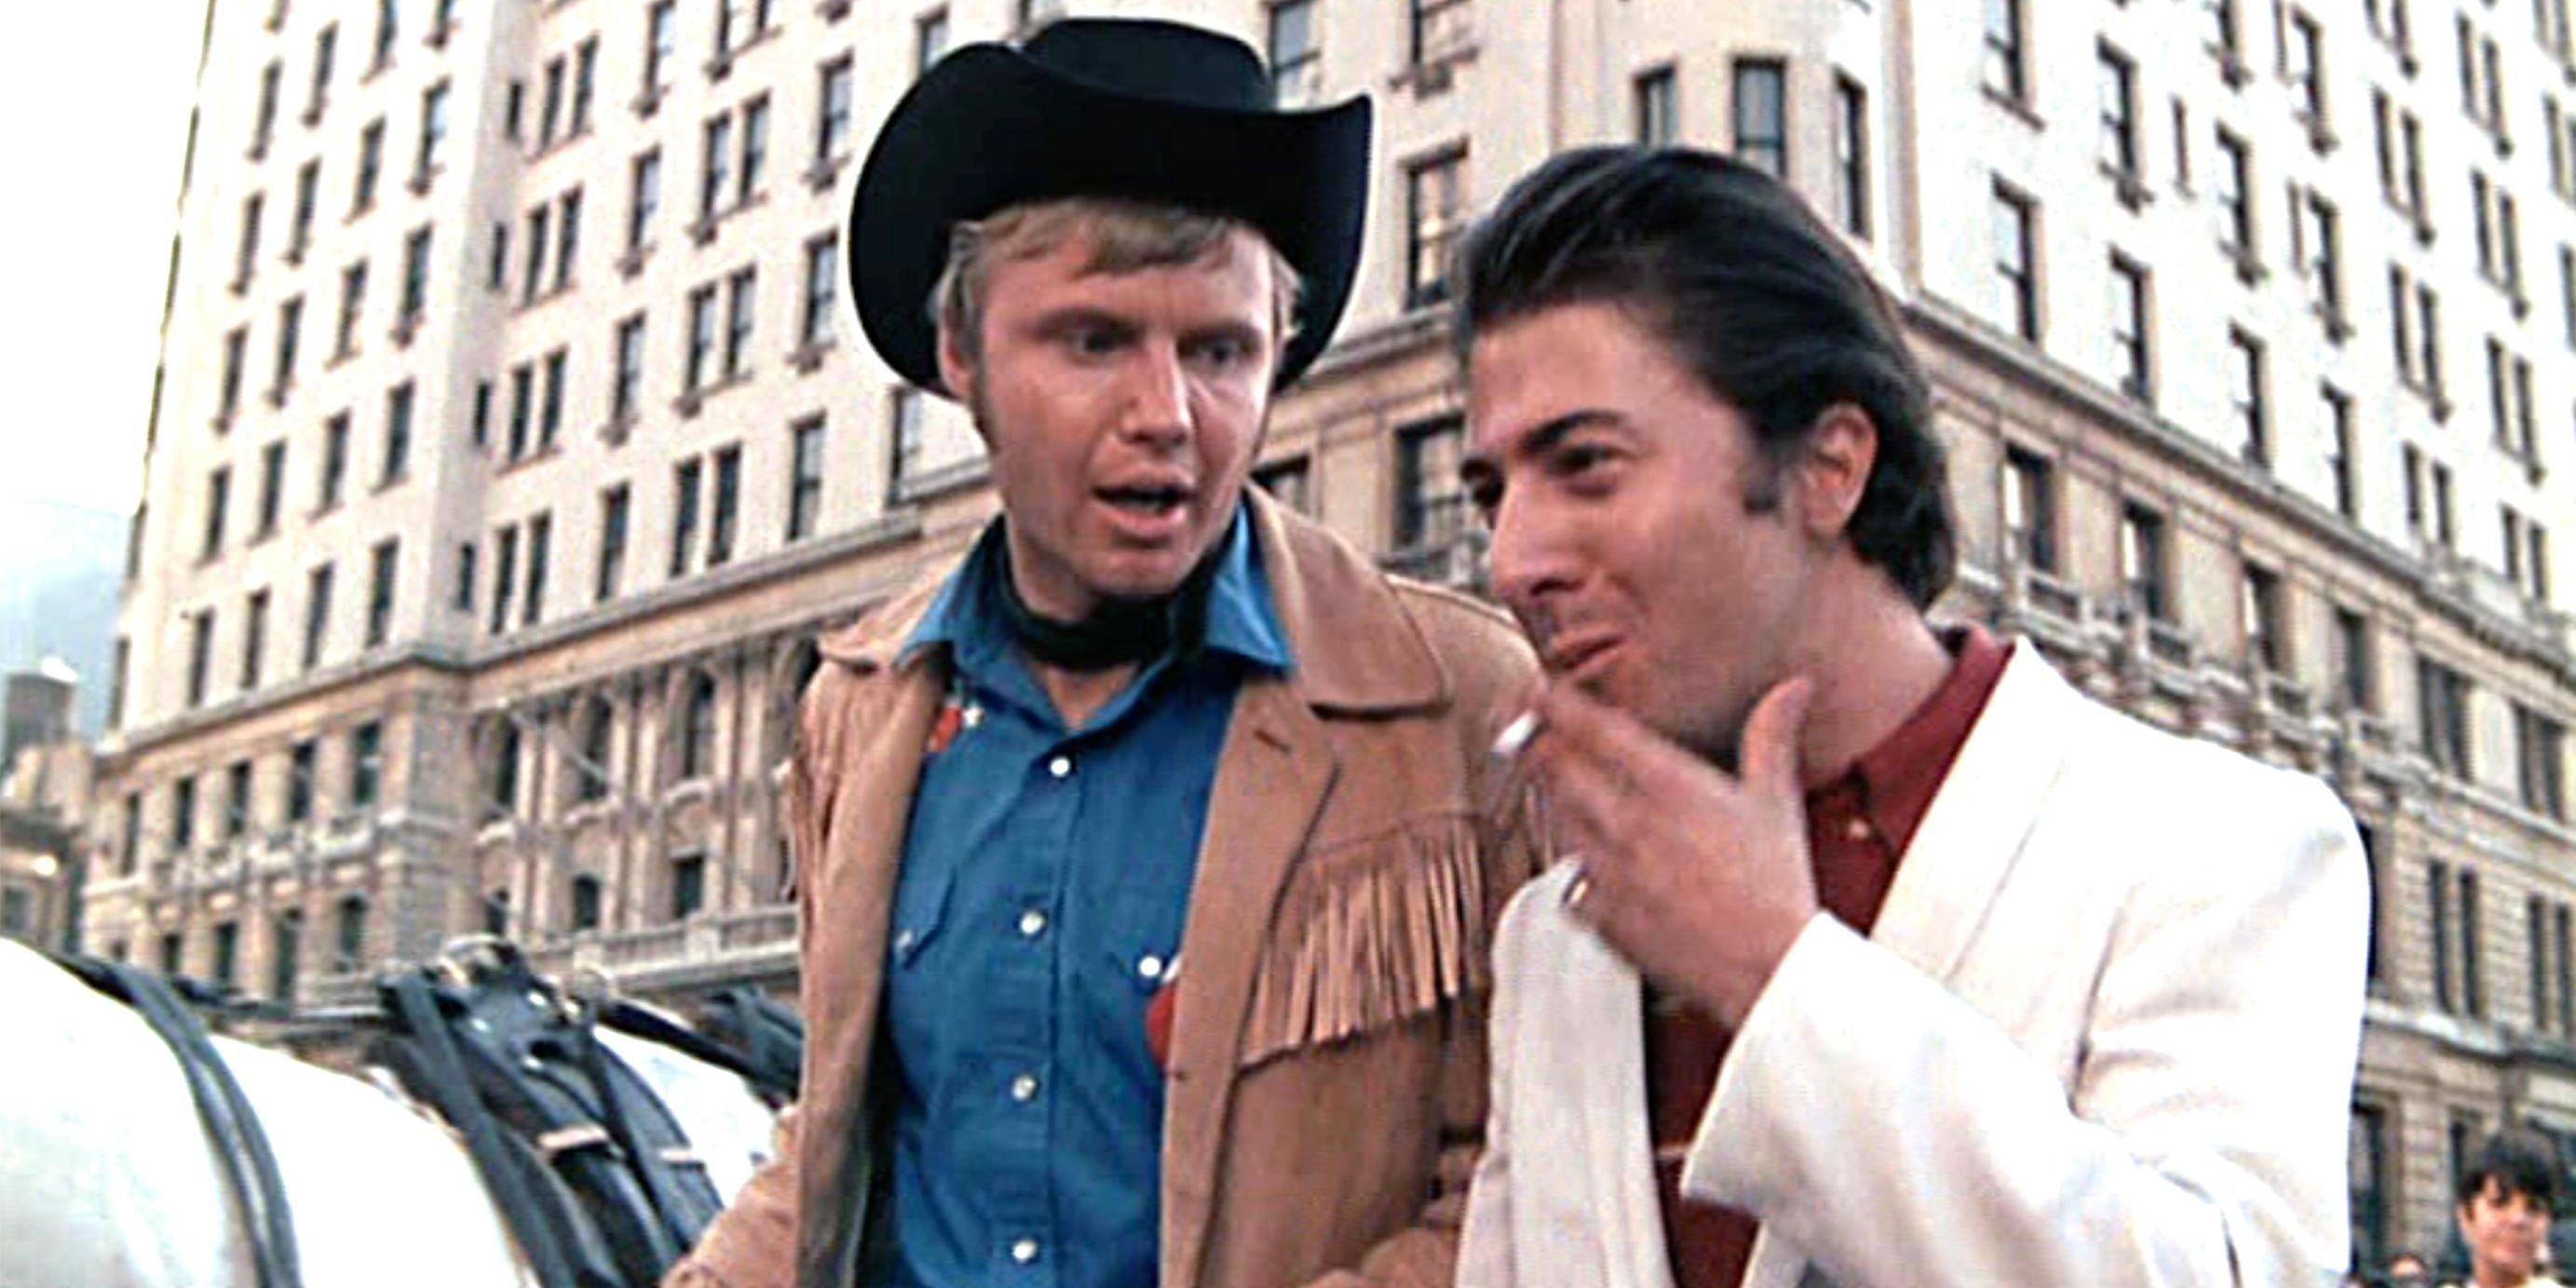 Midnight Cowboy 1969